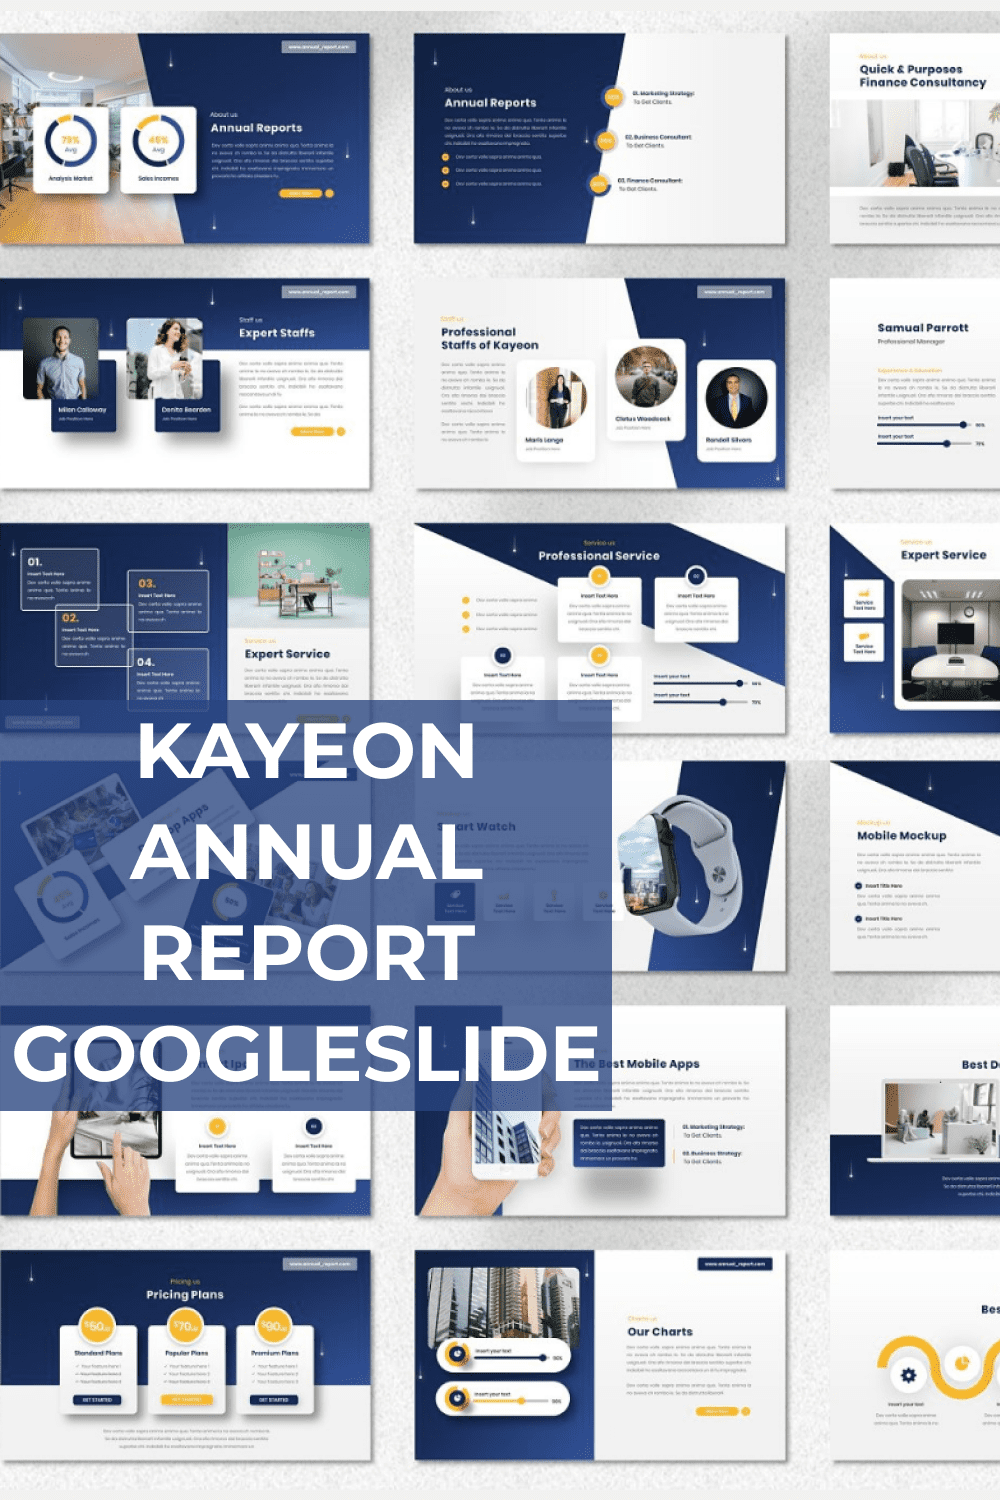 Kayeon - Annual Report Googleslide Pinterest.